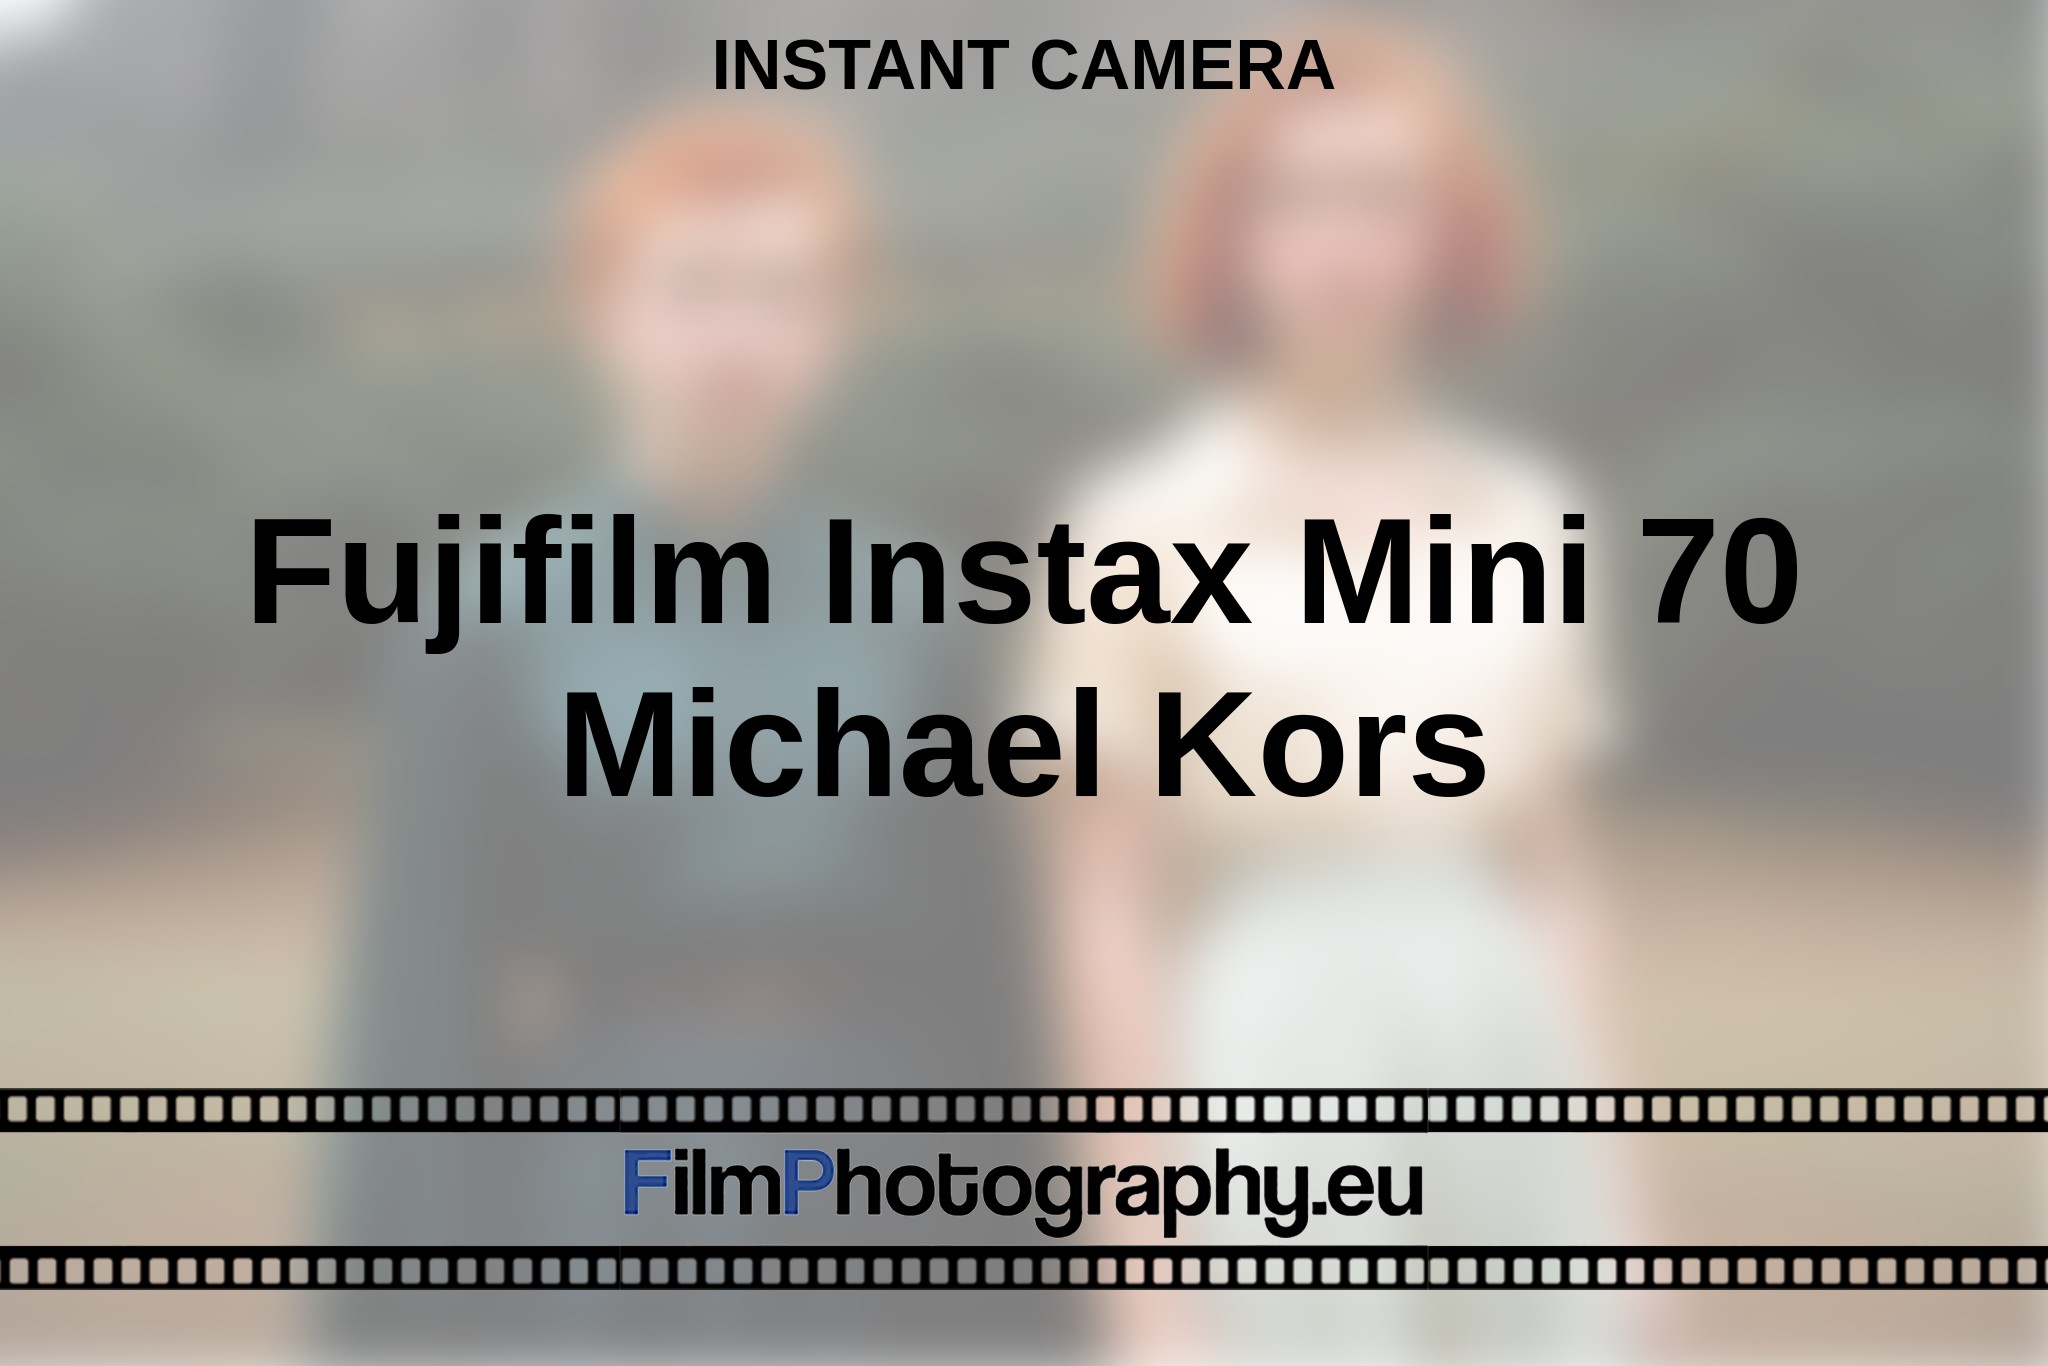 fujifilm-instax-mini-70-michael-kors-instant-camera-bnv.jpg